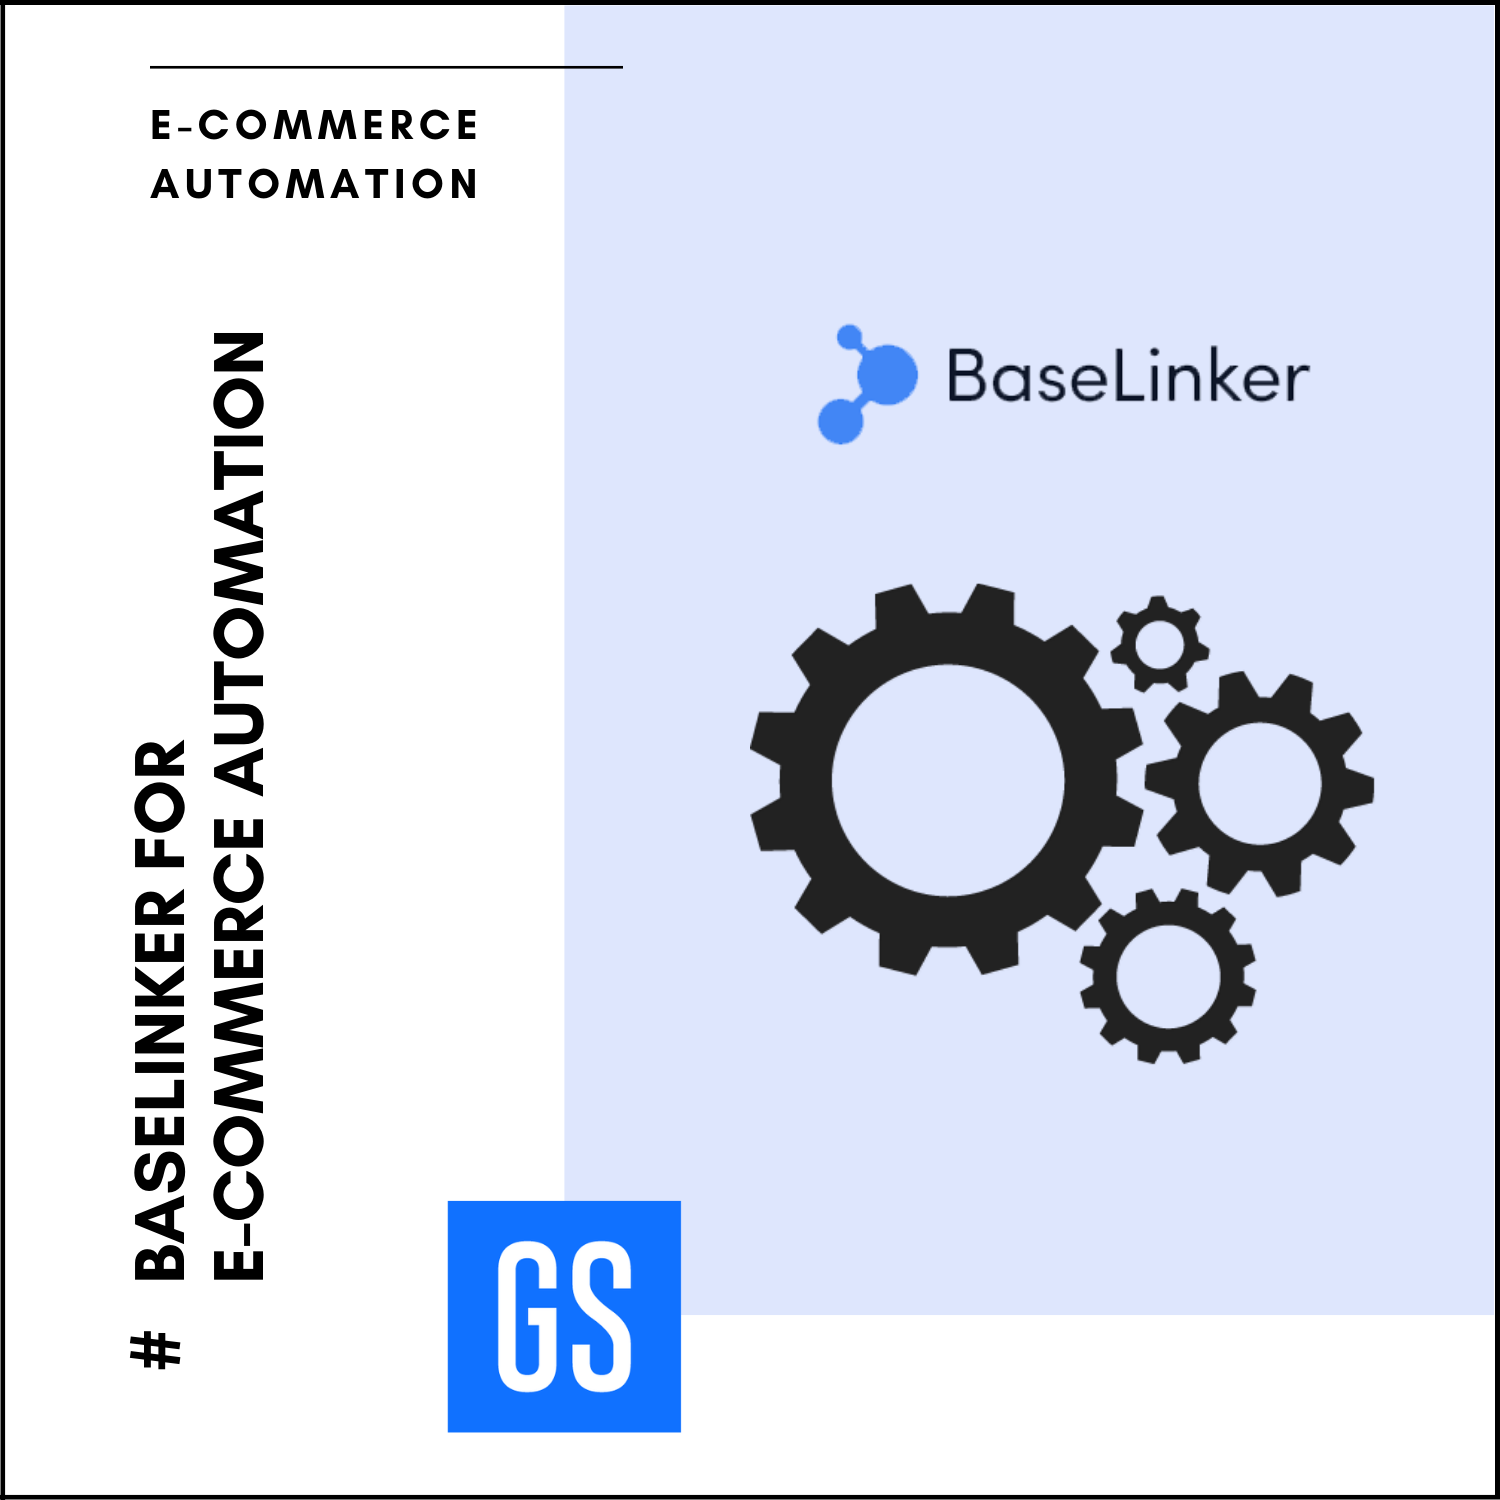 Baselinker for eCommerce automation